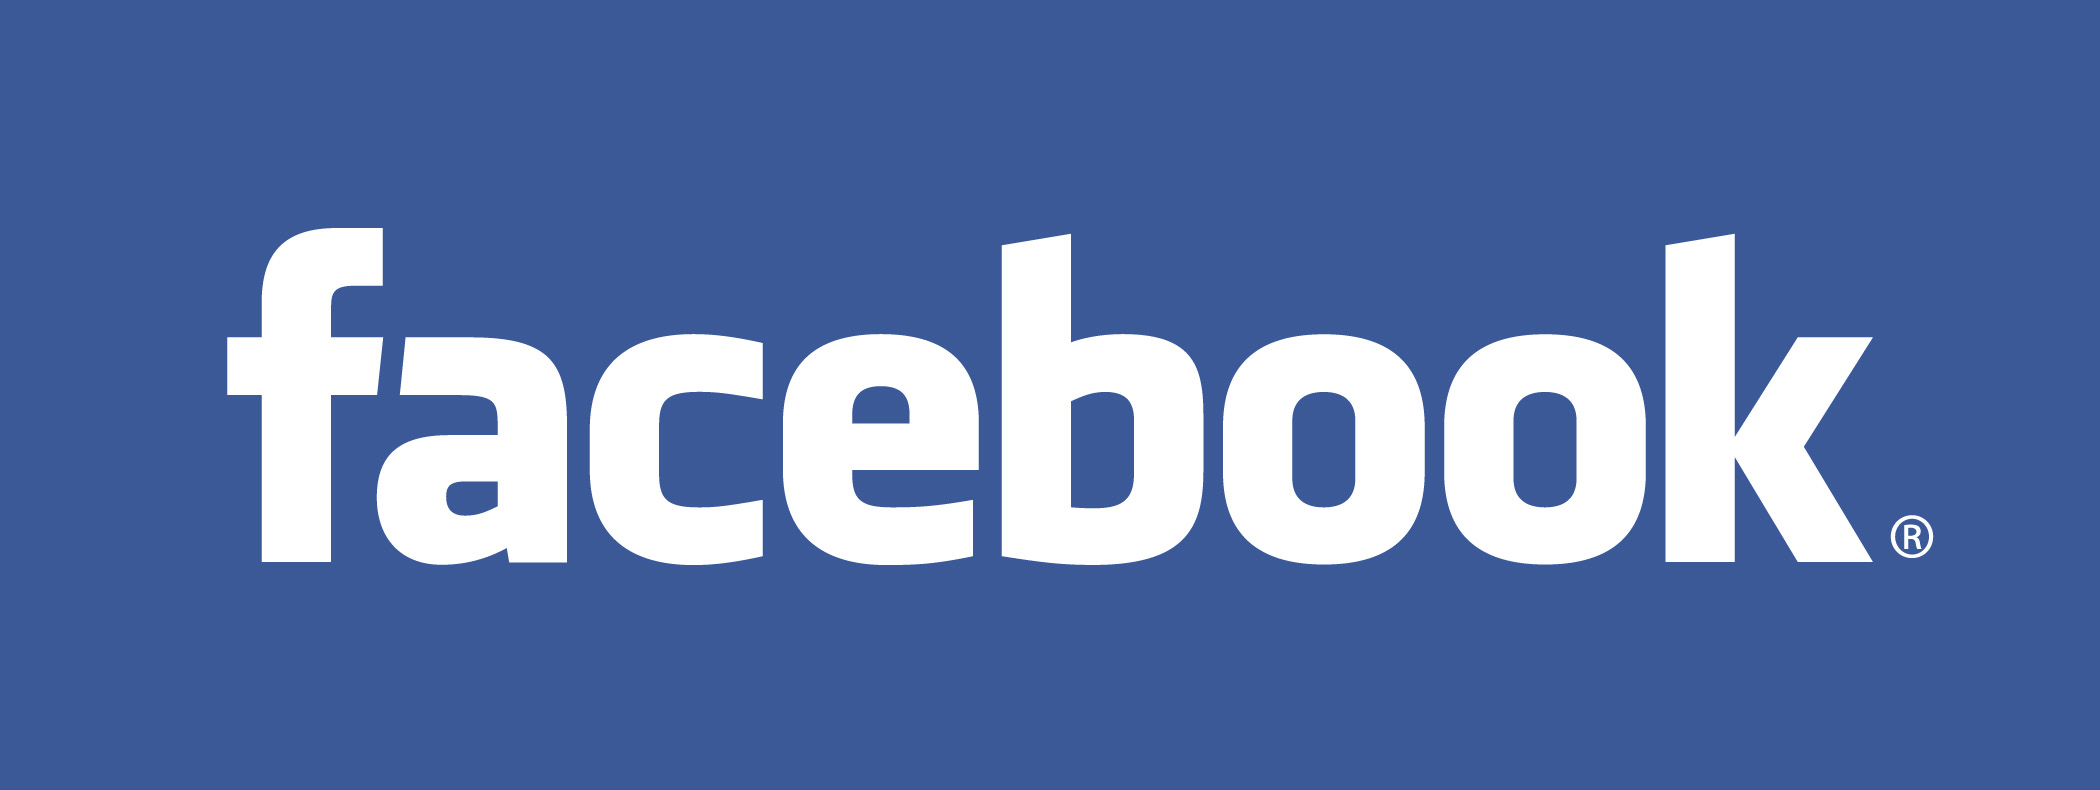 facebook_logo1.jpg